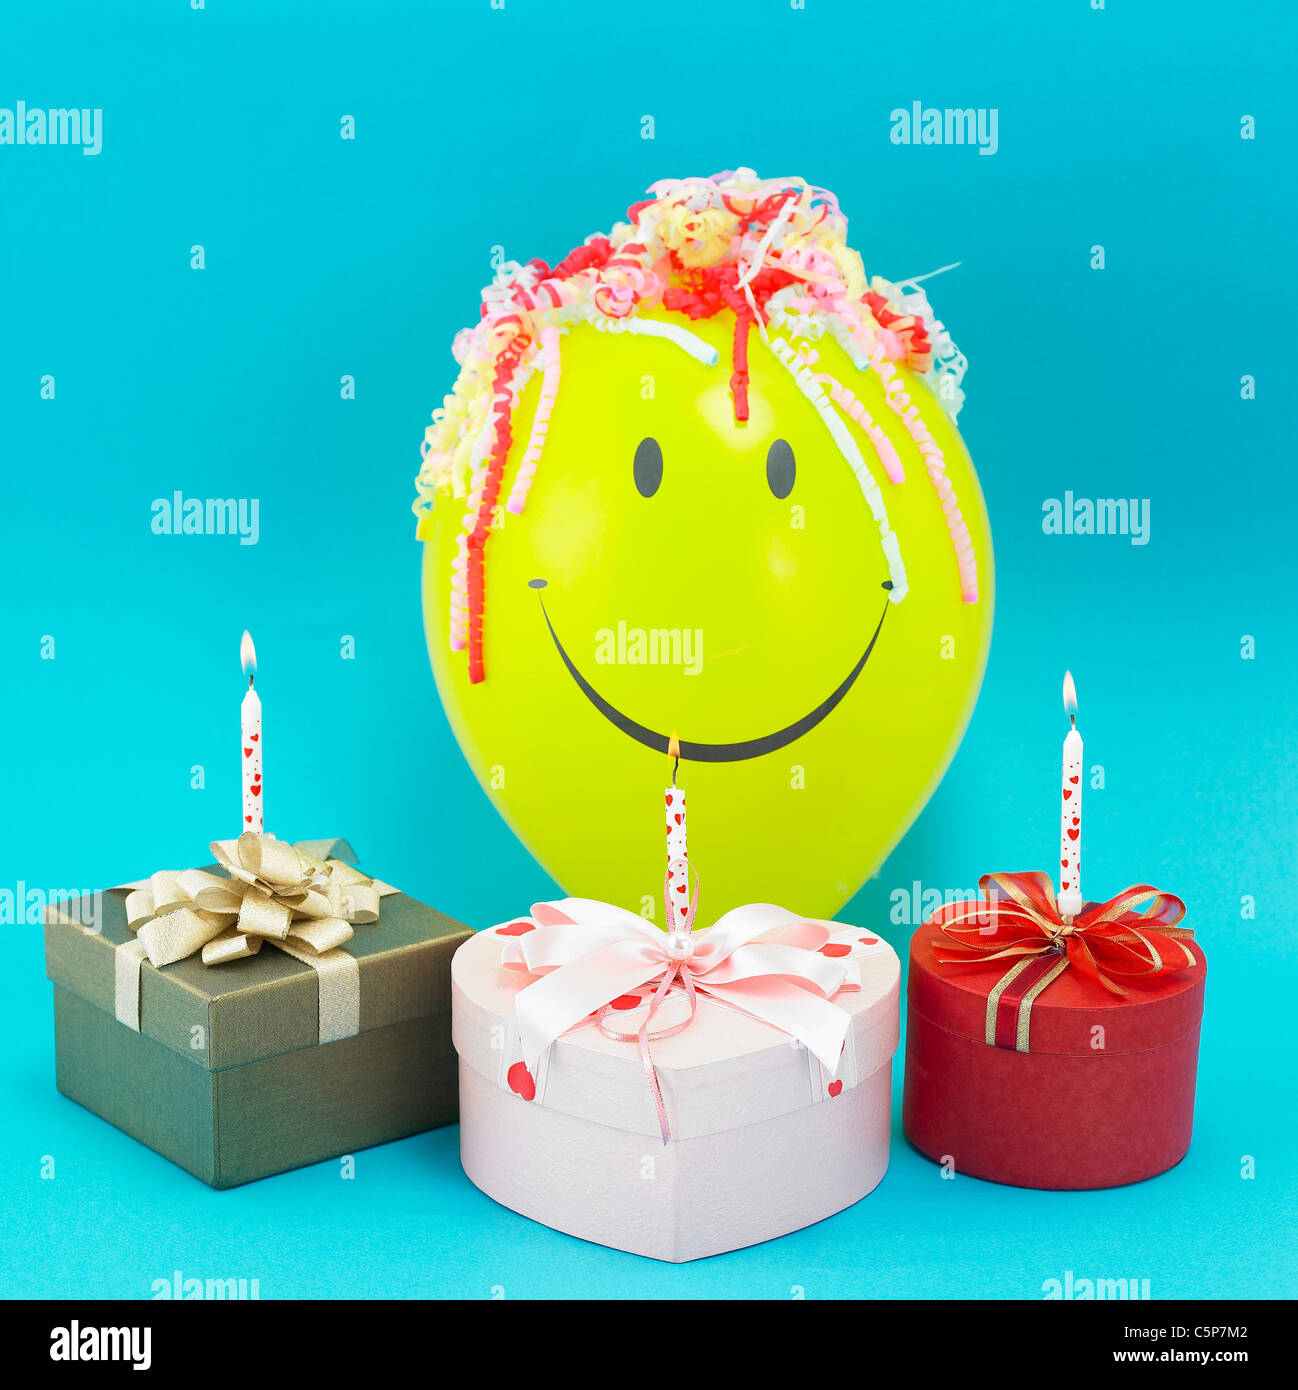 Presents, and balloon Stock Photo